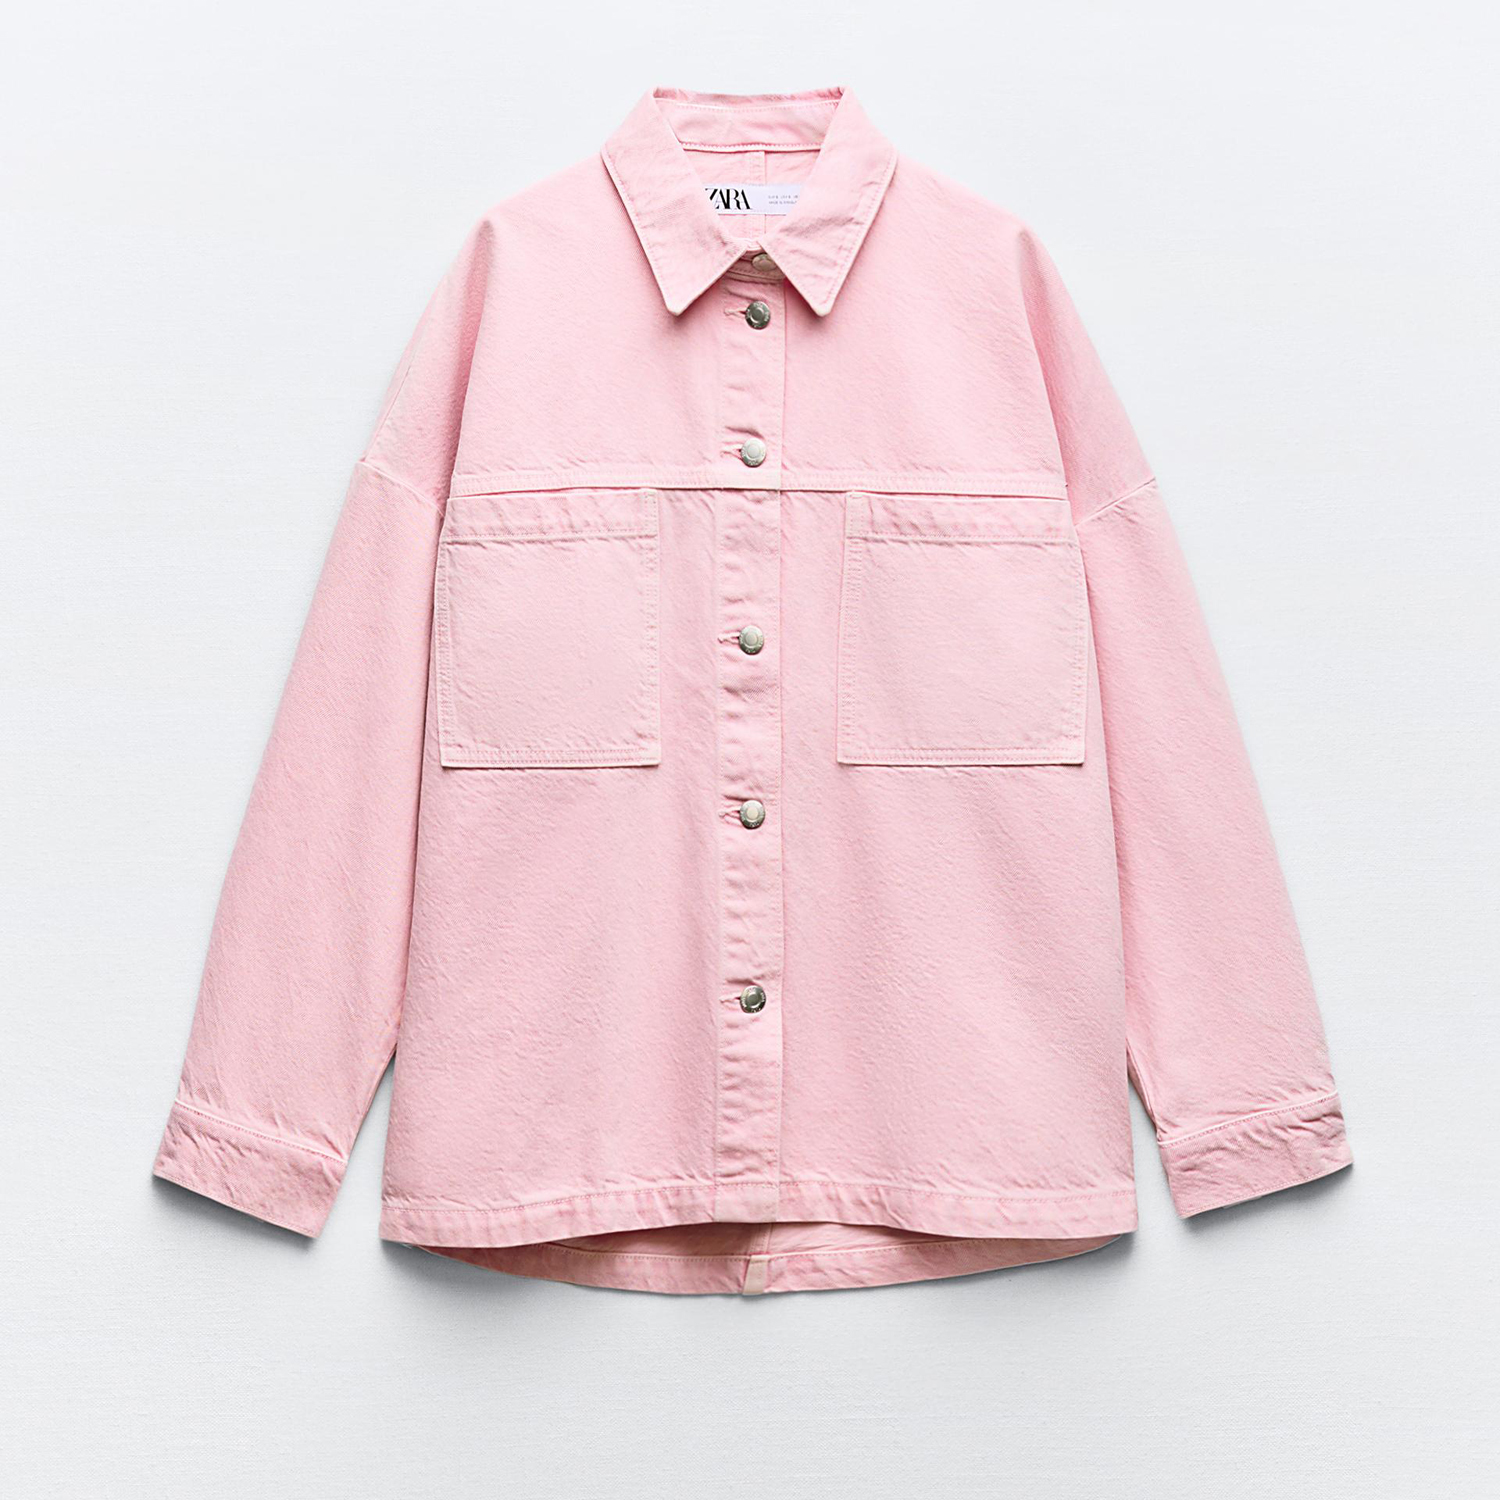 Джинсовая куртка Zara Z1975 With Patch Pockets, розовый куртка zara textured with pockets бежевый